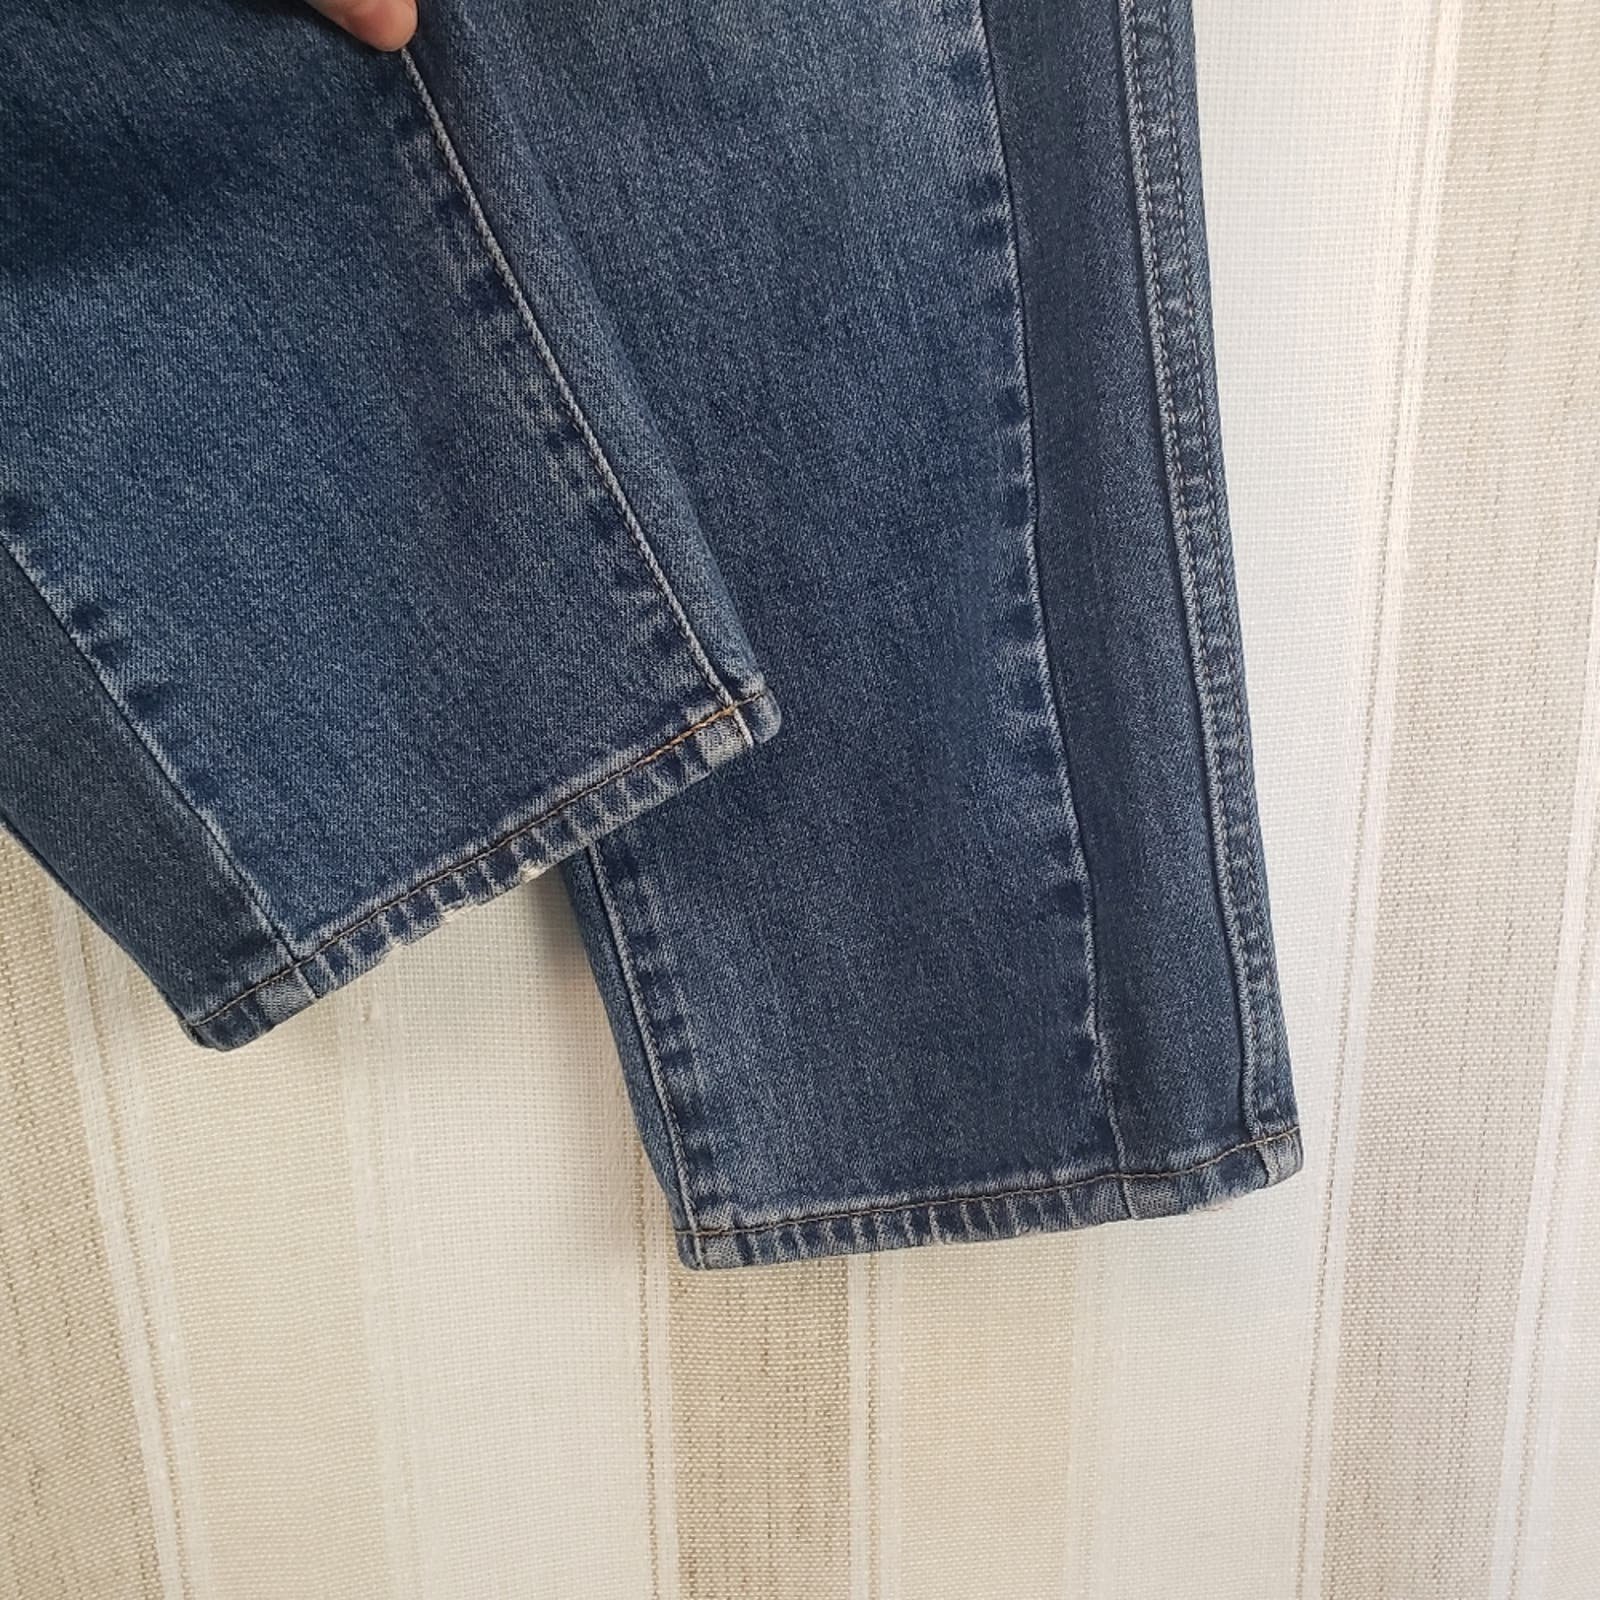 High quality J. Crew Vintage Straight Jeans Blue Size 28 KocPMb2NP US Sale